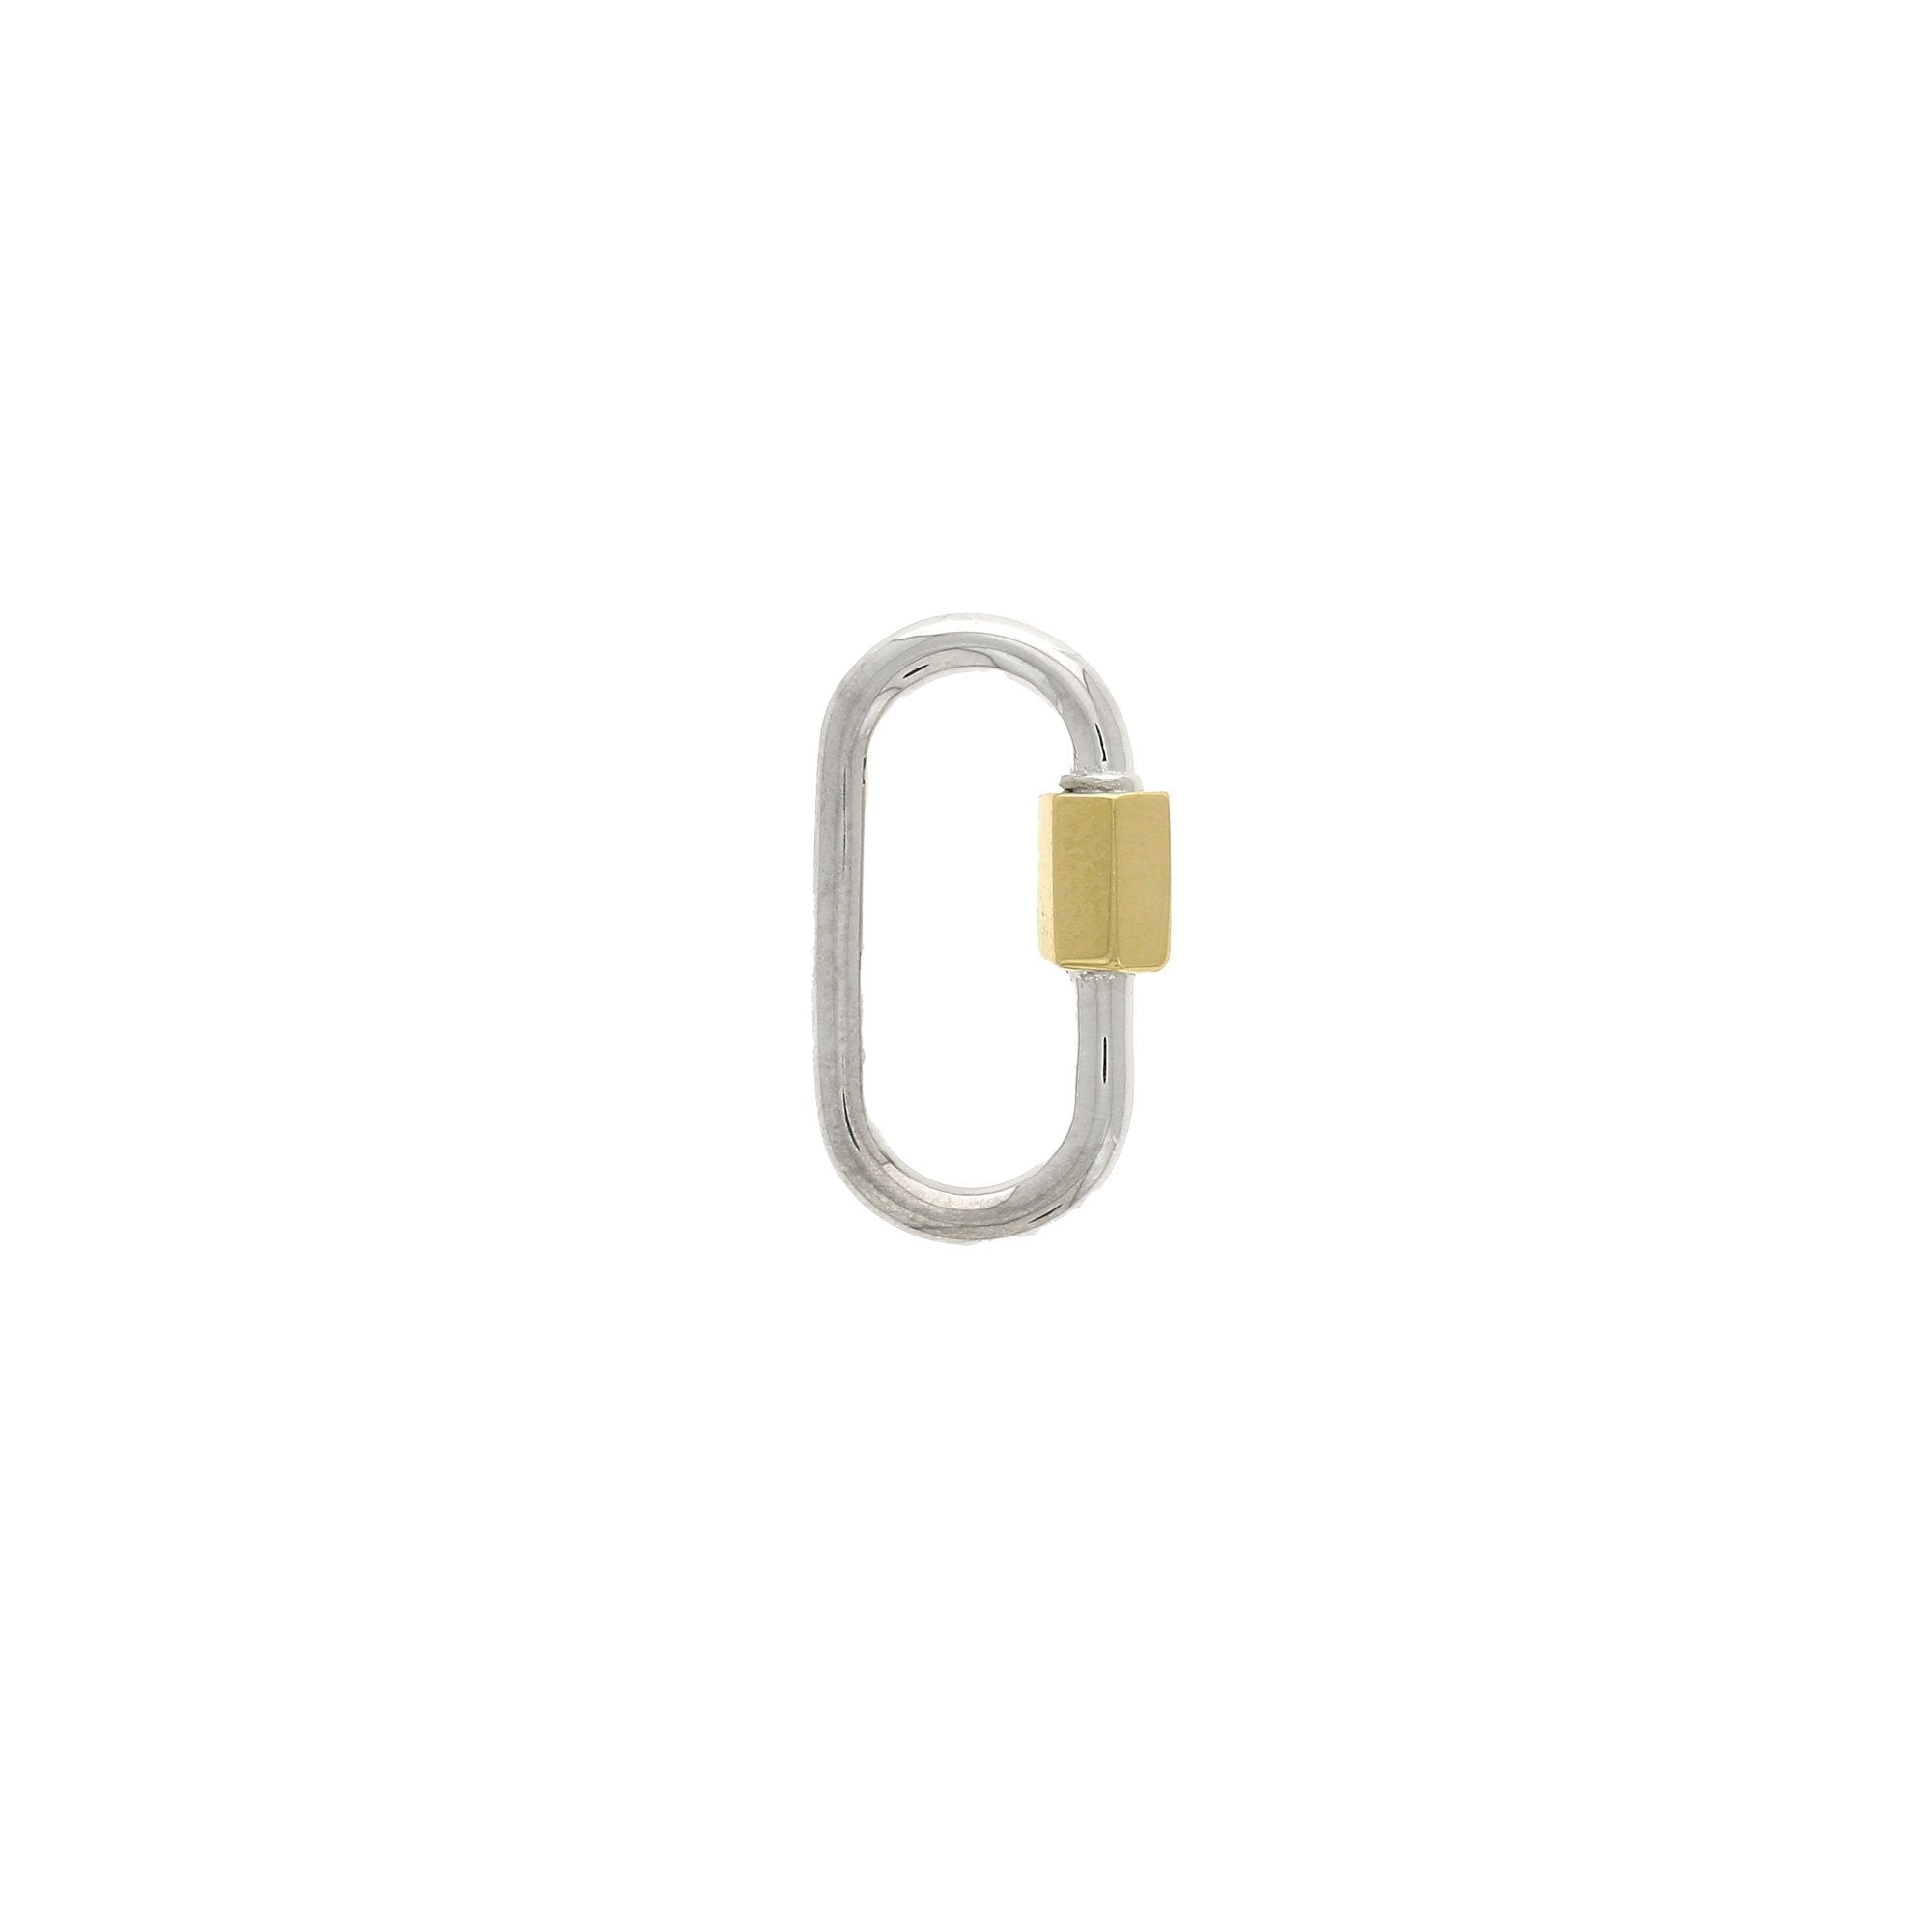 White Gold Medium Lock with Yellow Gold Closure